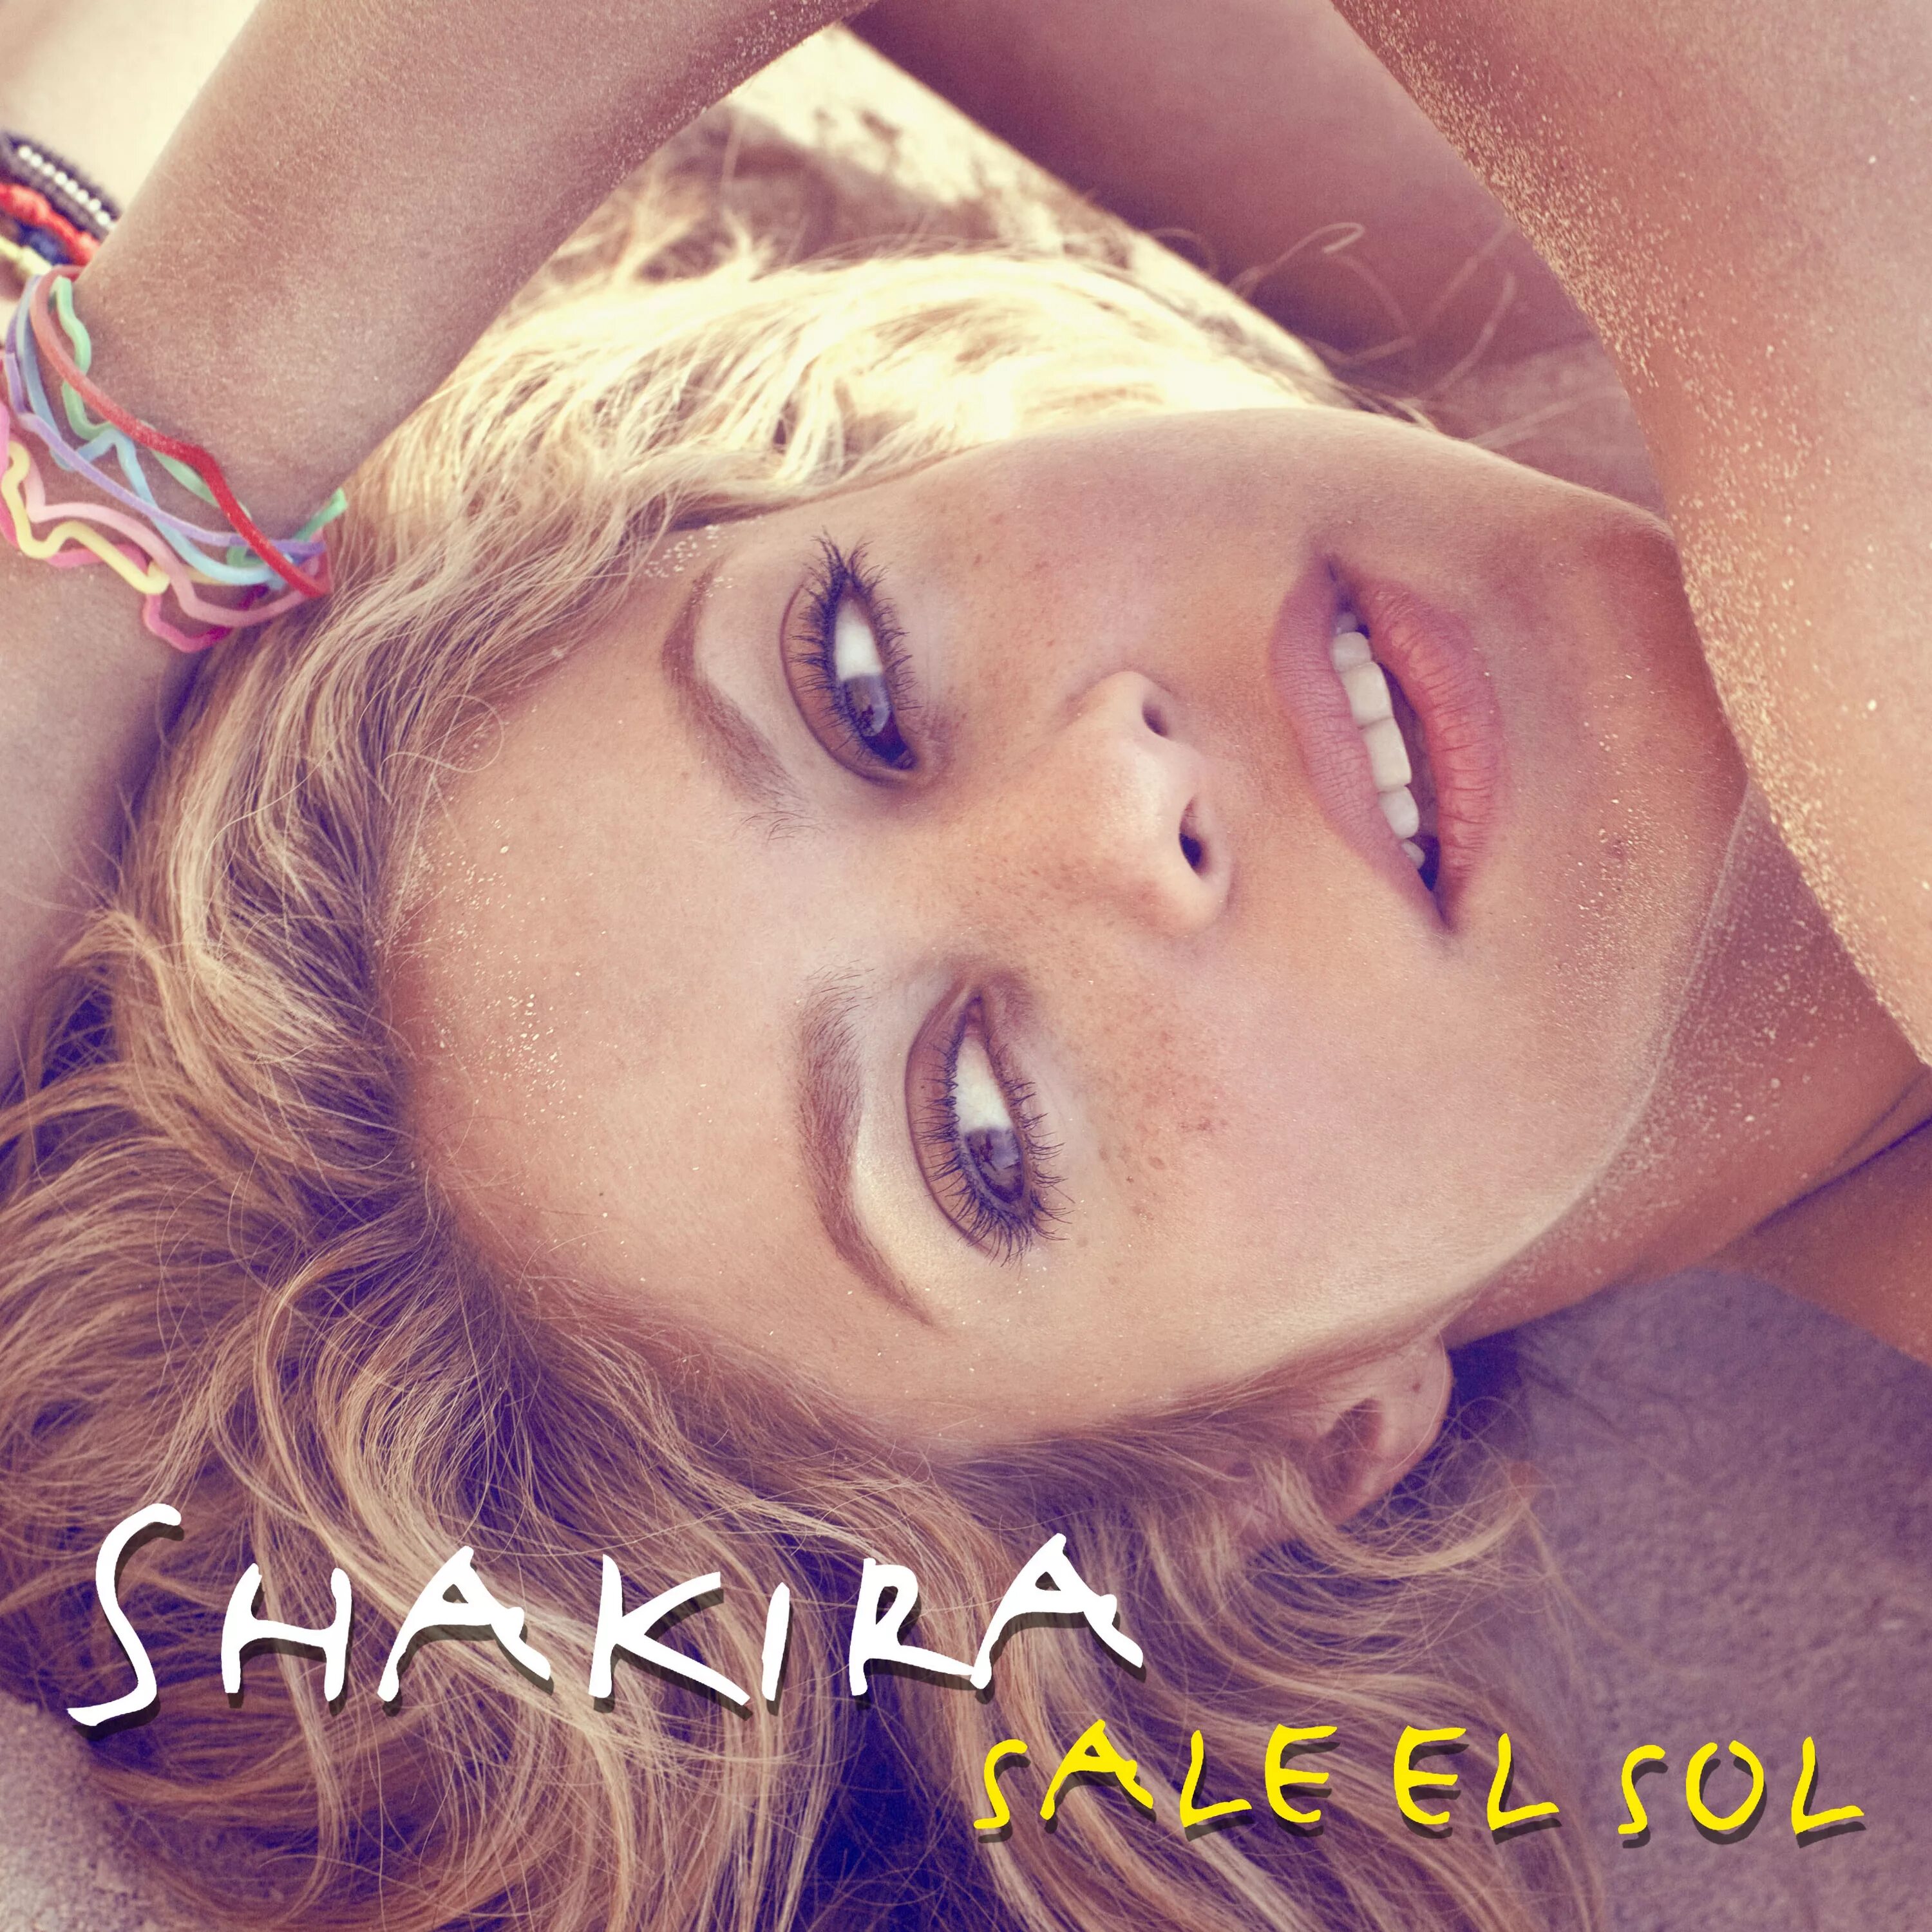 Shakira album. Shakira sale el Sol альбом.